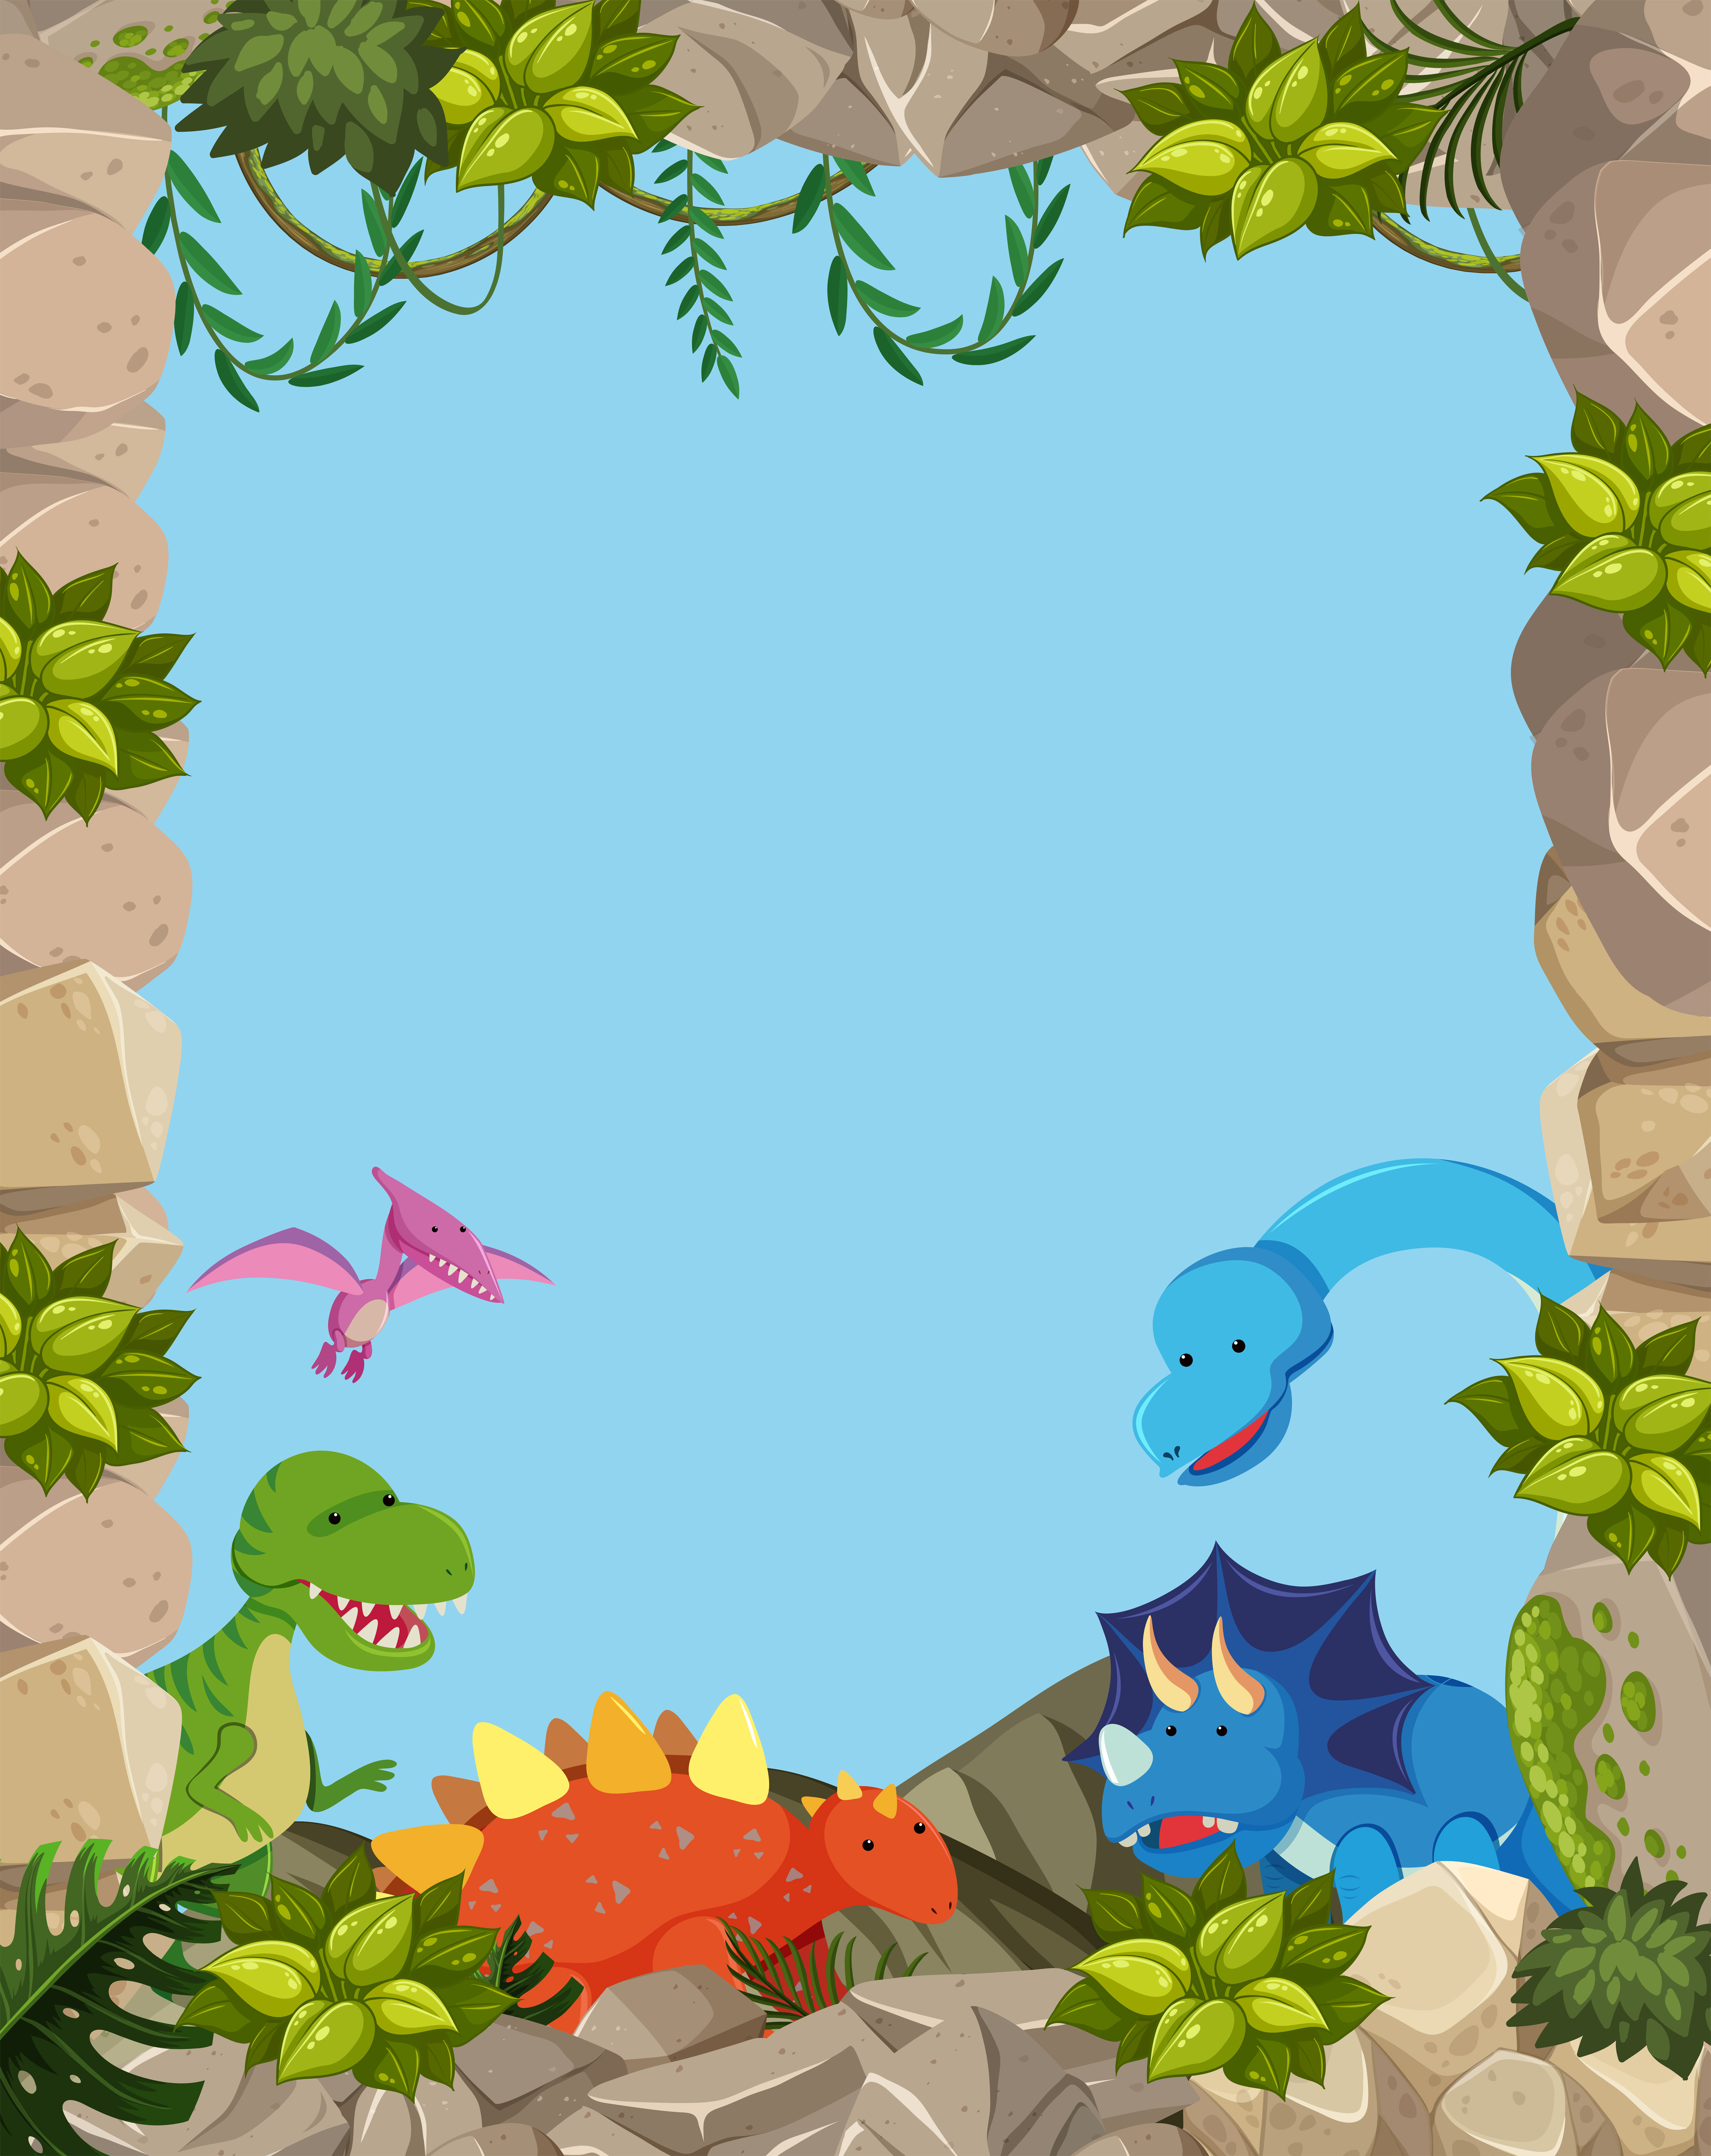 Nature cute dinosaur frame Download Free Vectors, Clipart Graphics